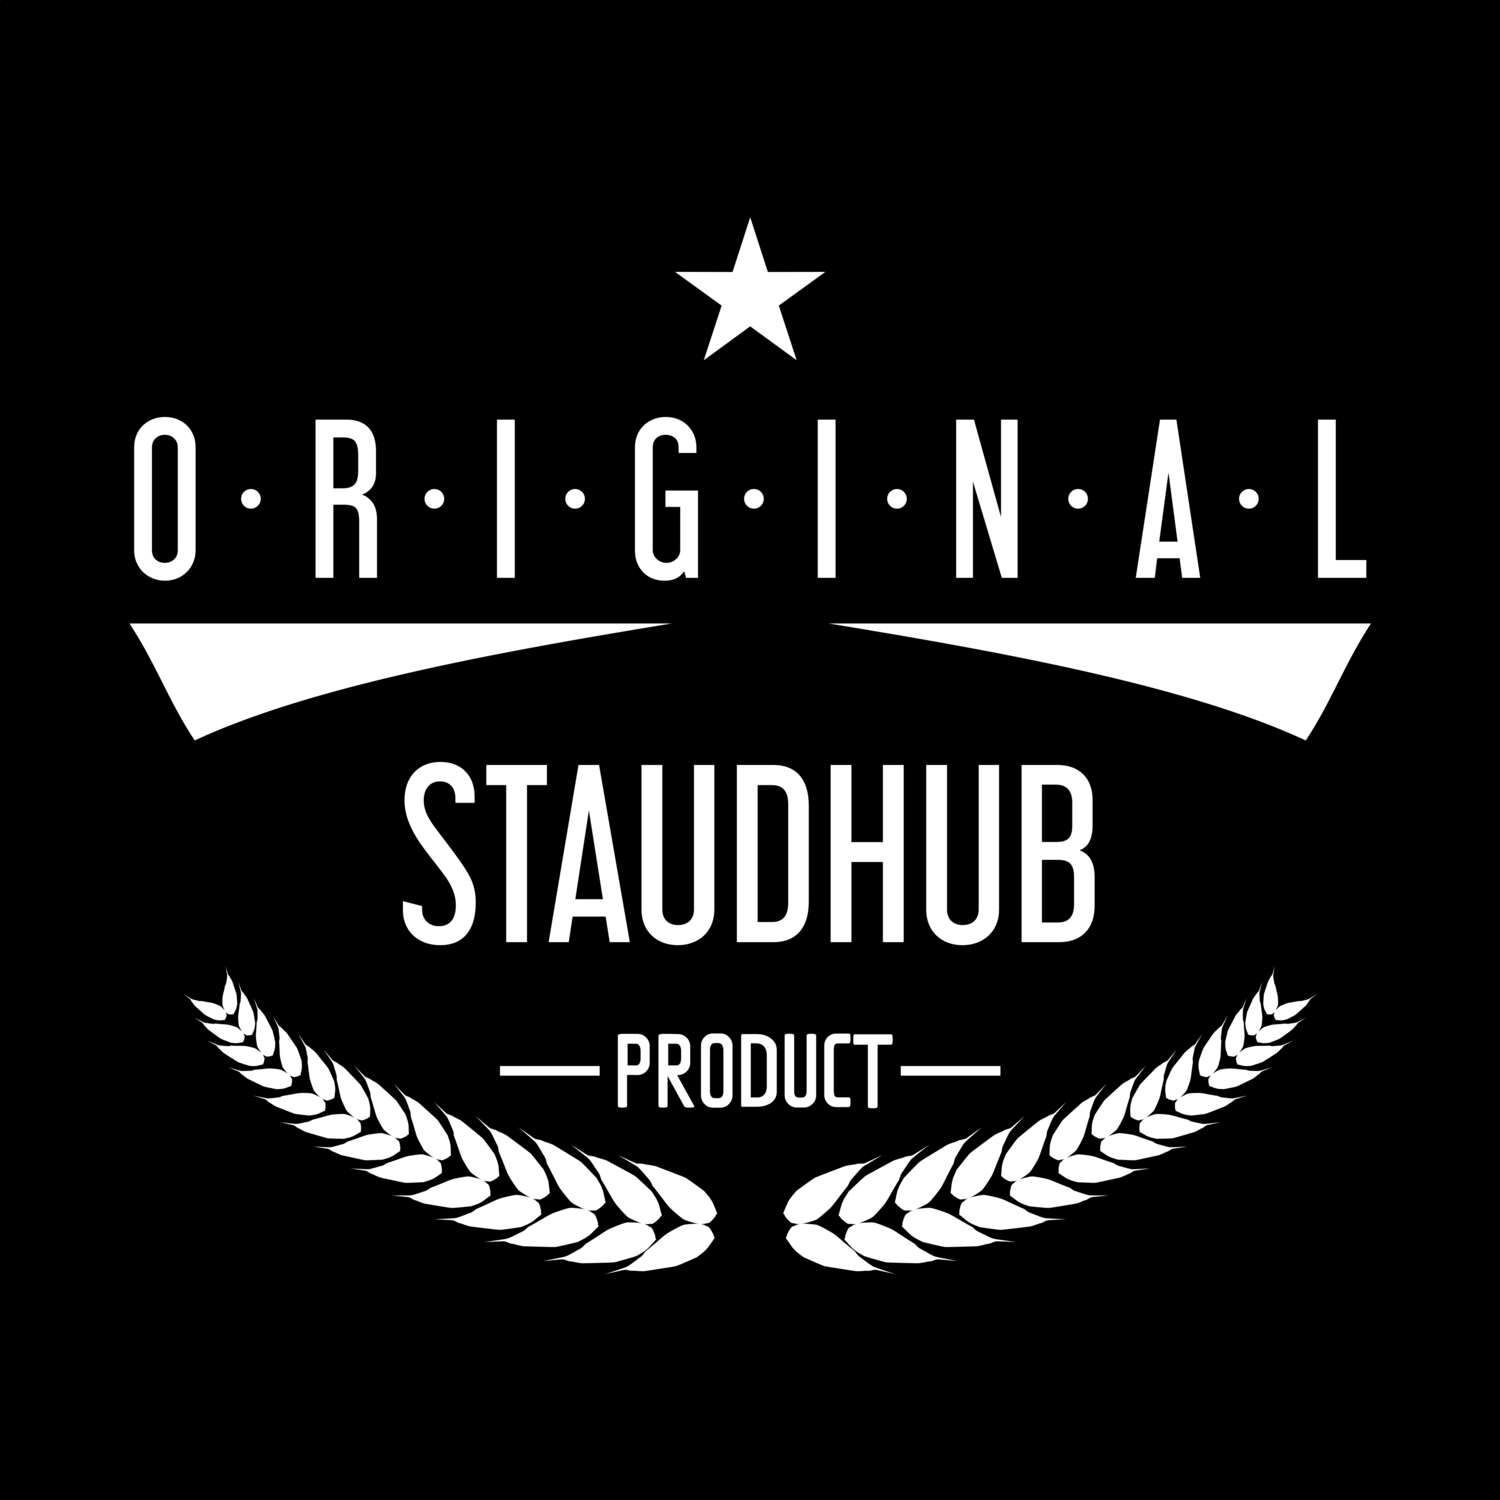 Staudhub T-Shirt »Original Product«